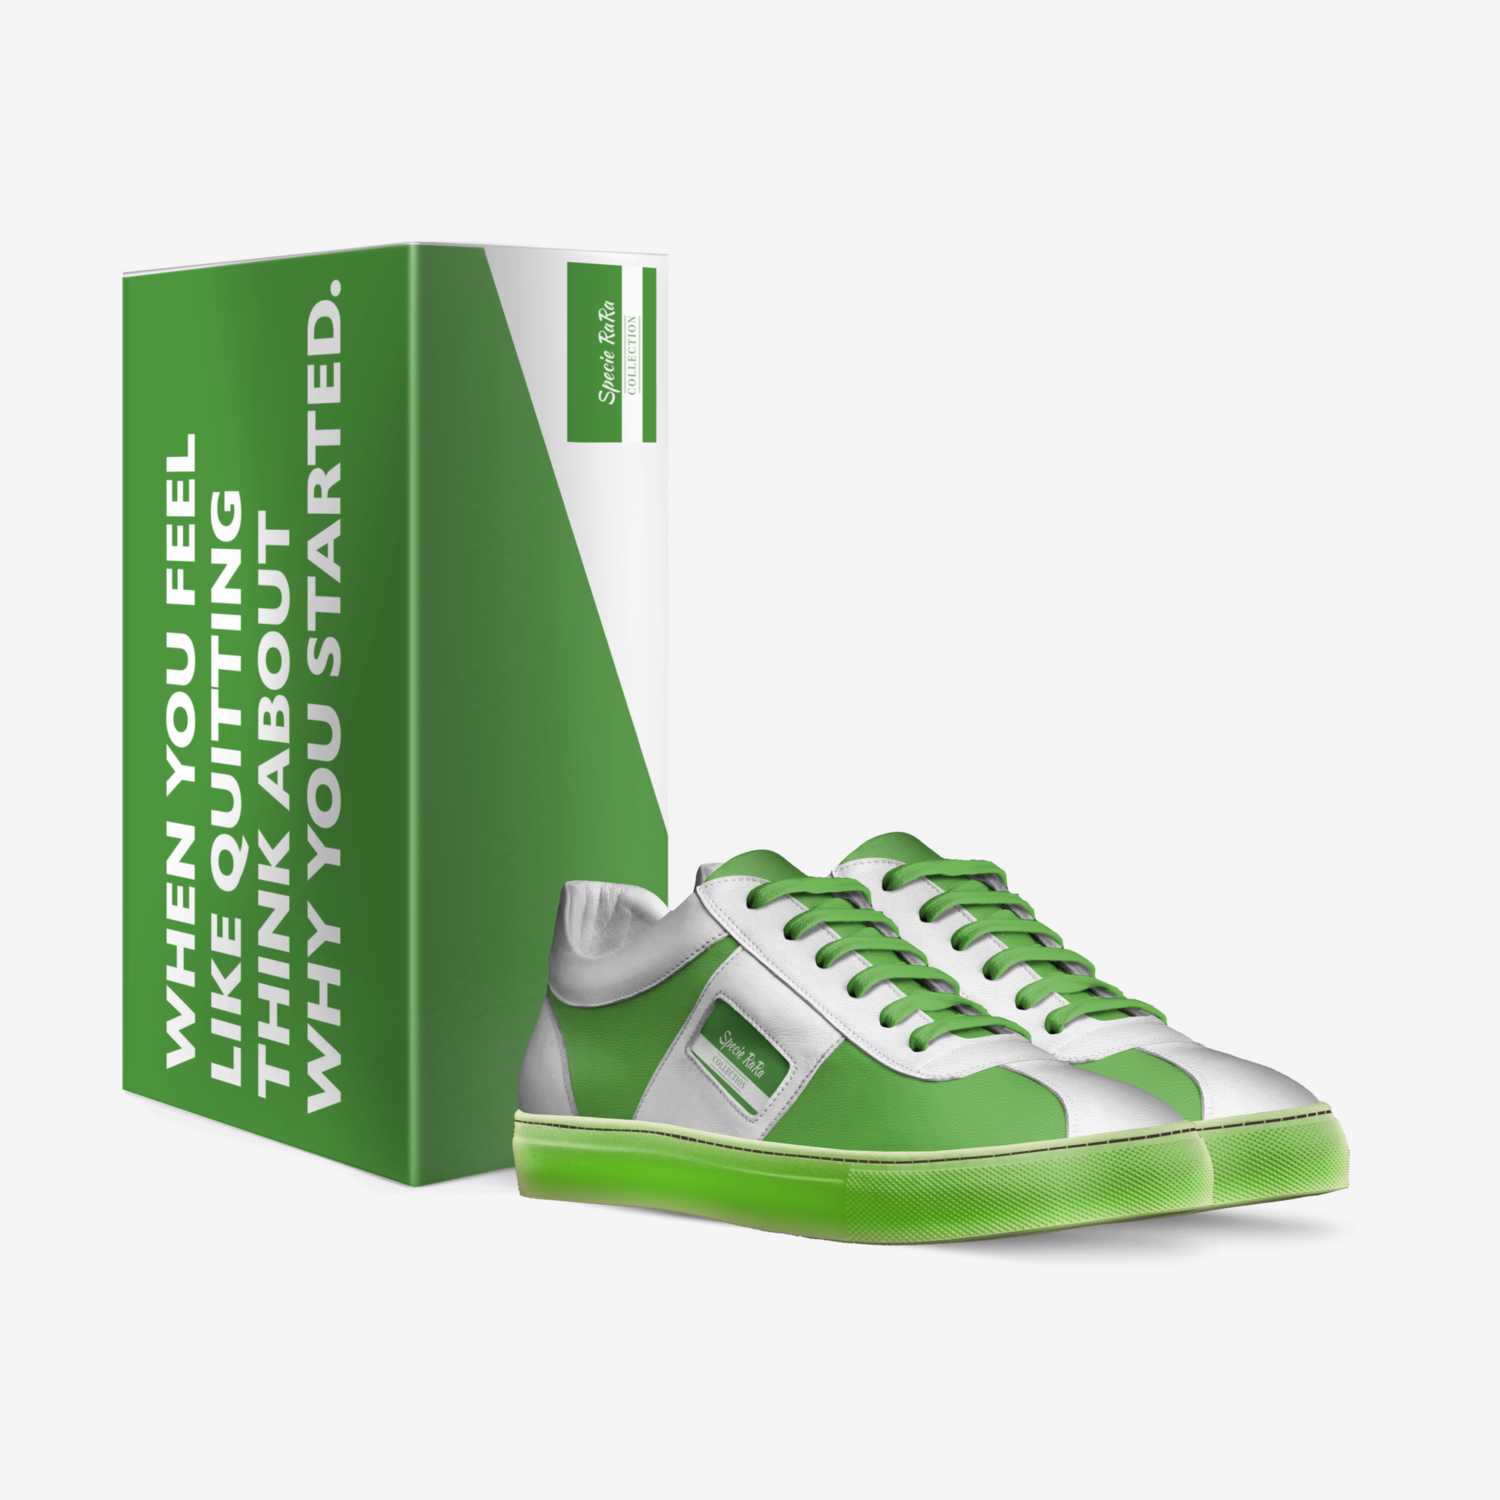 RairBreedzO RocOut custom made in Italy shoes by Drago Ga'Binetto | Box view